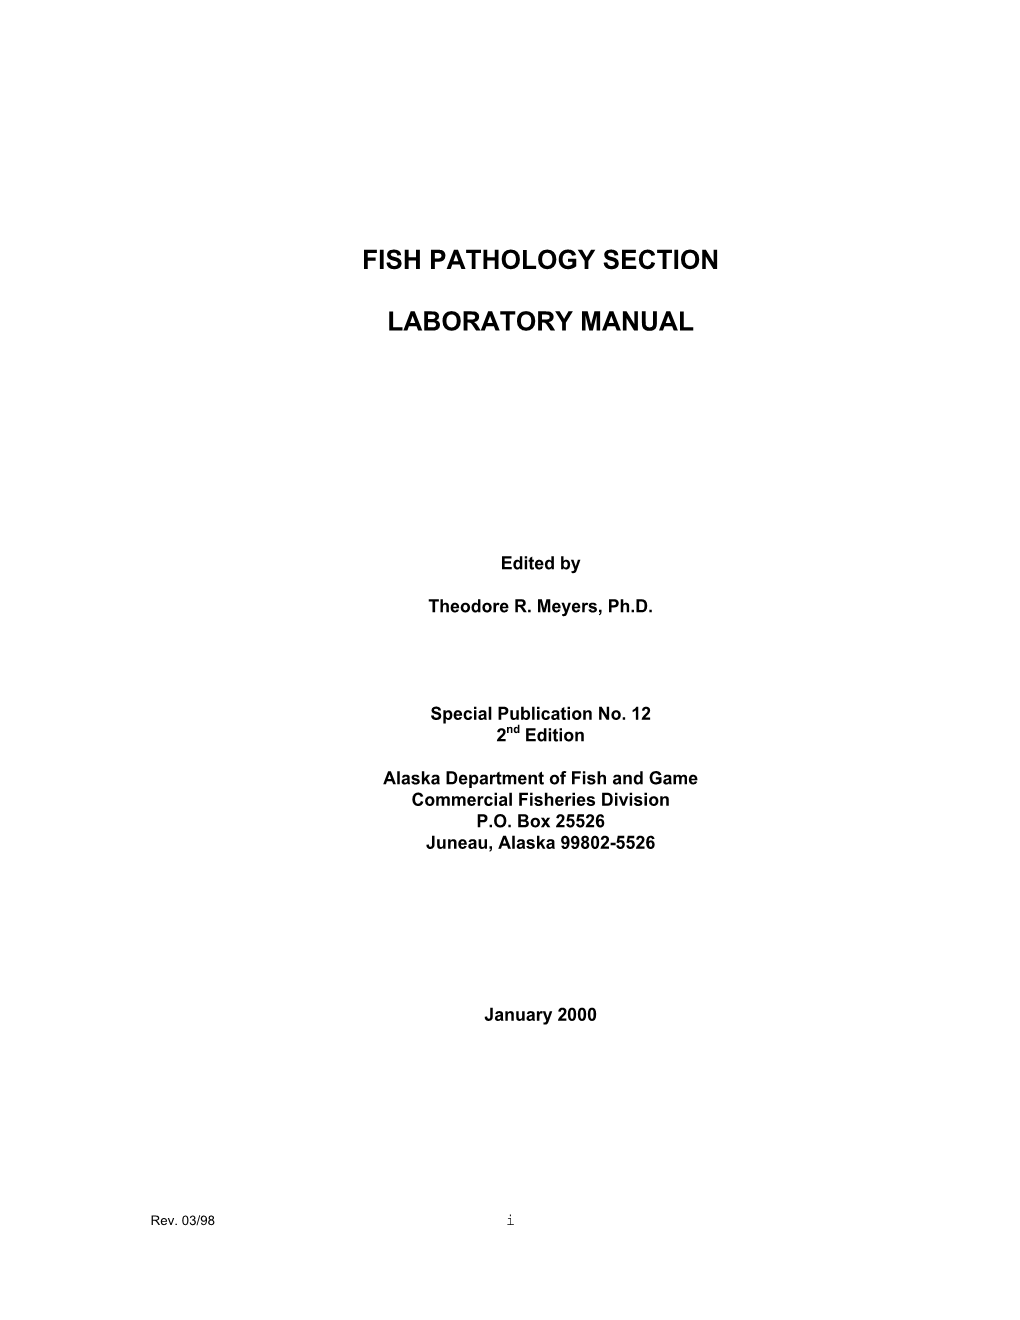 Fish Pathology Section Laboratory Manual